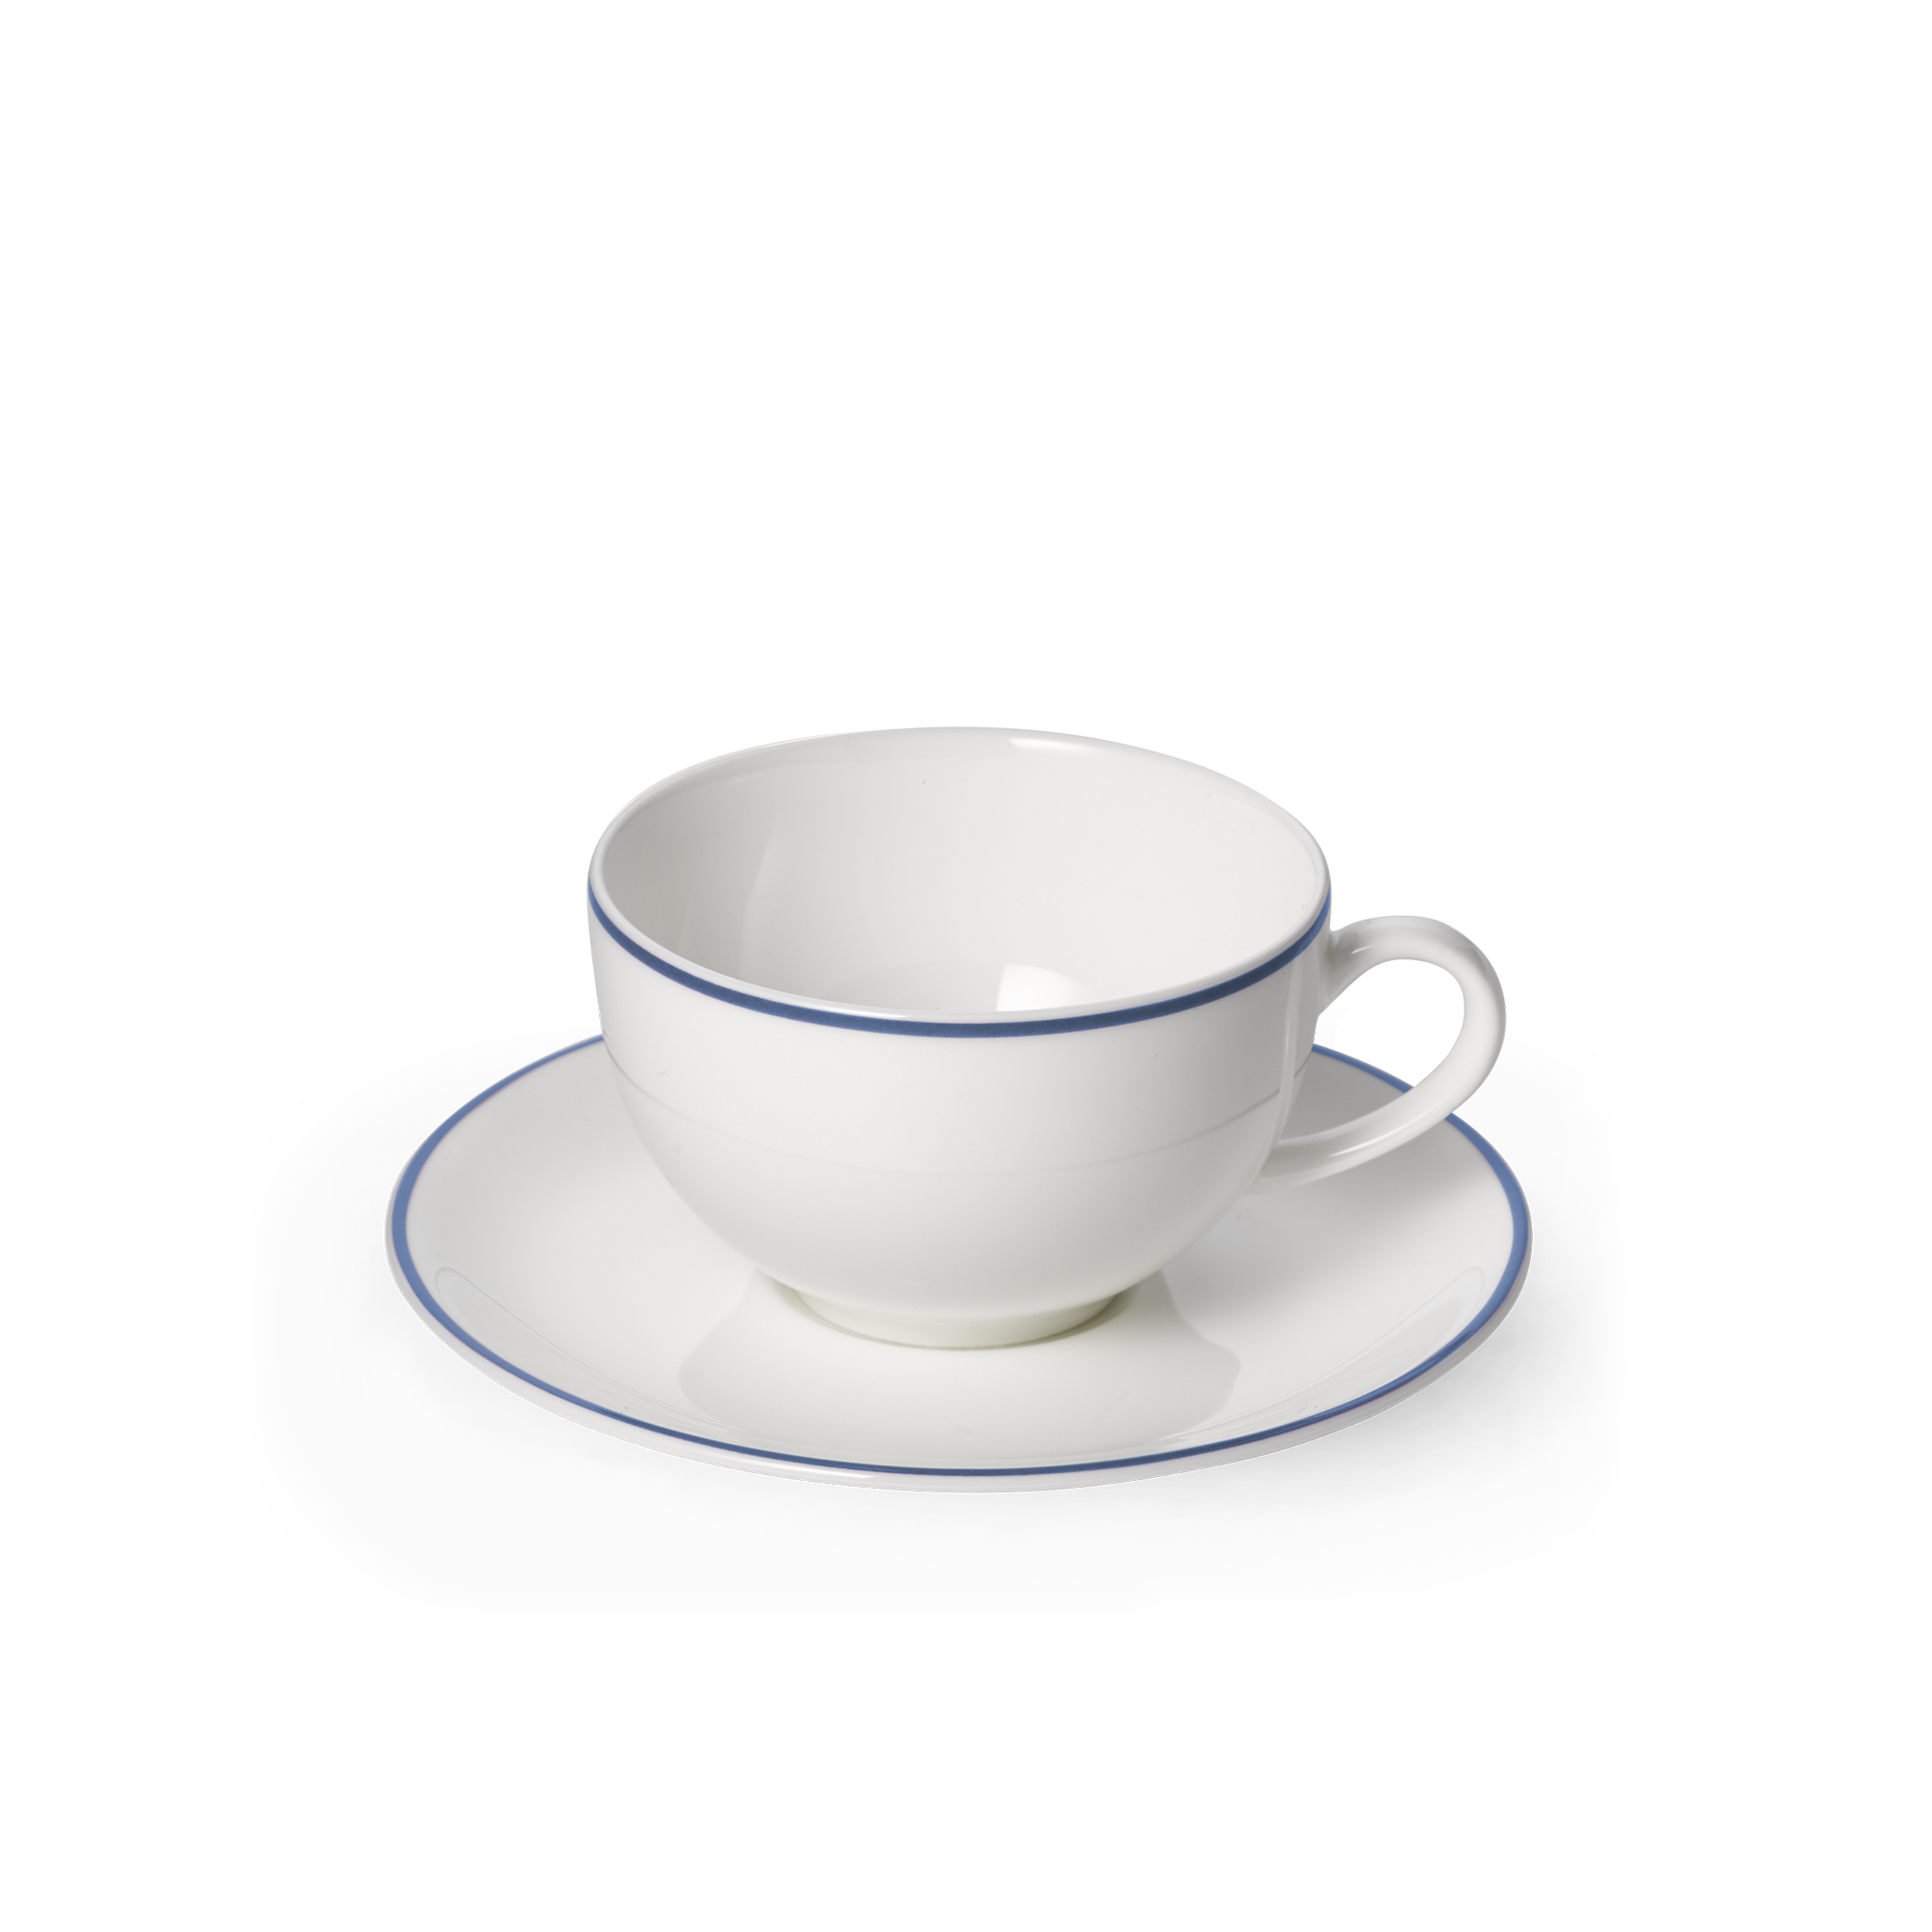 Simplicity coffee mug light blue